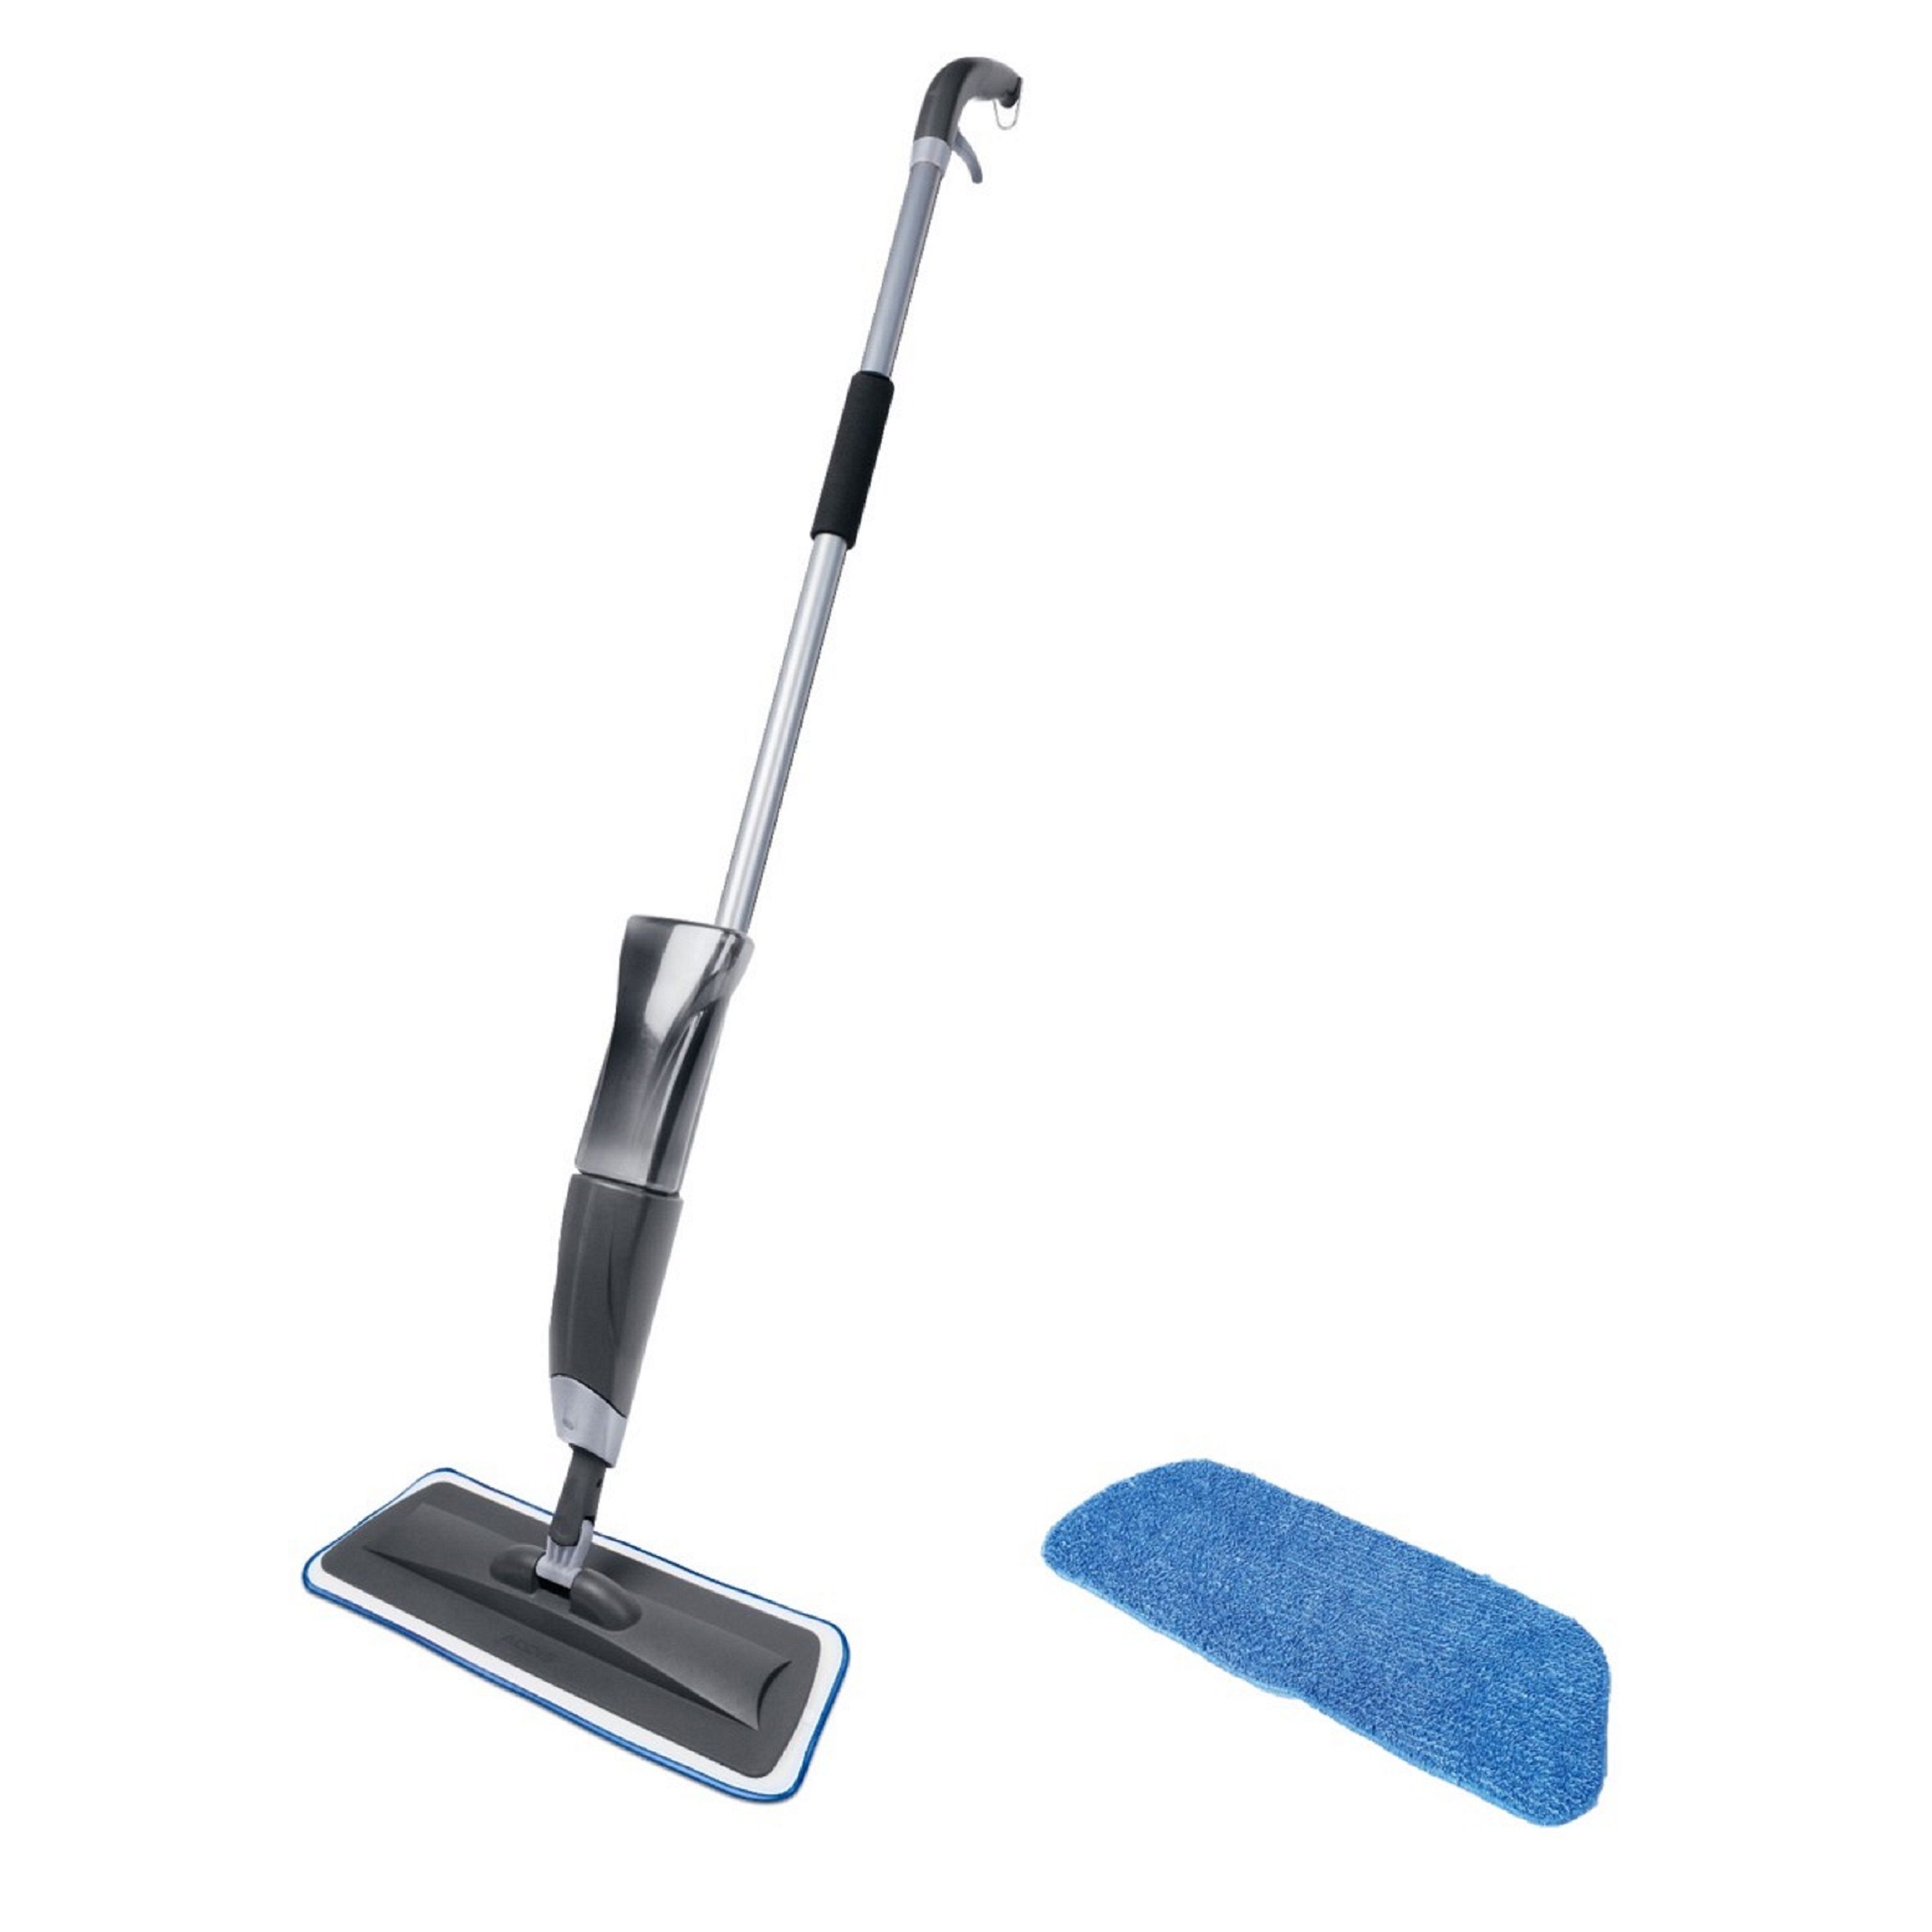 Replacement Household Mop Head Spray Mop Pads Fit For Vileda Spray Mop UK Seller 